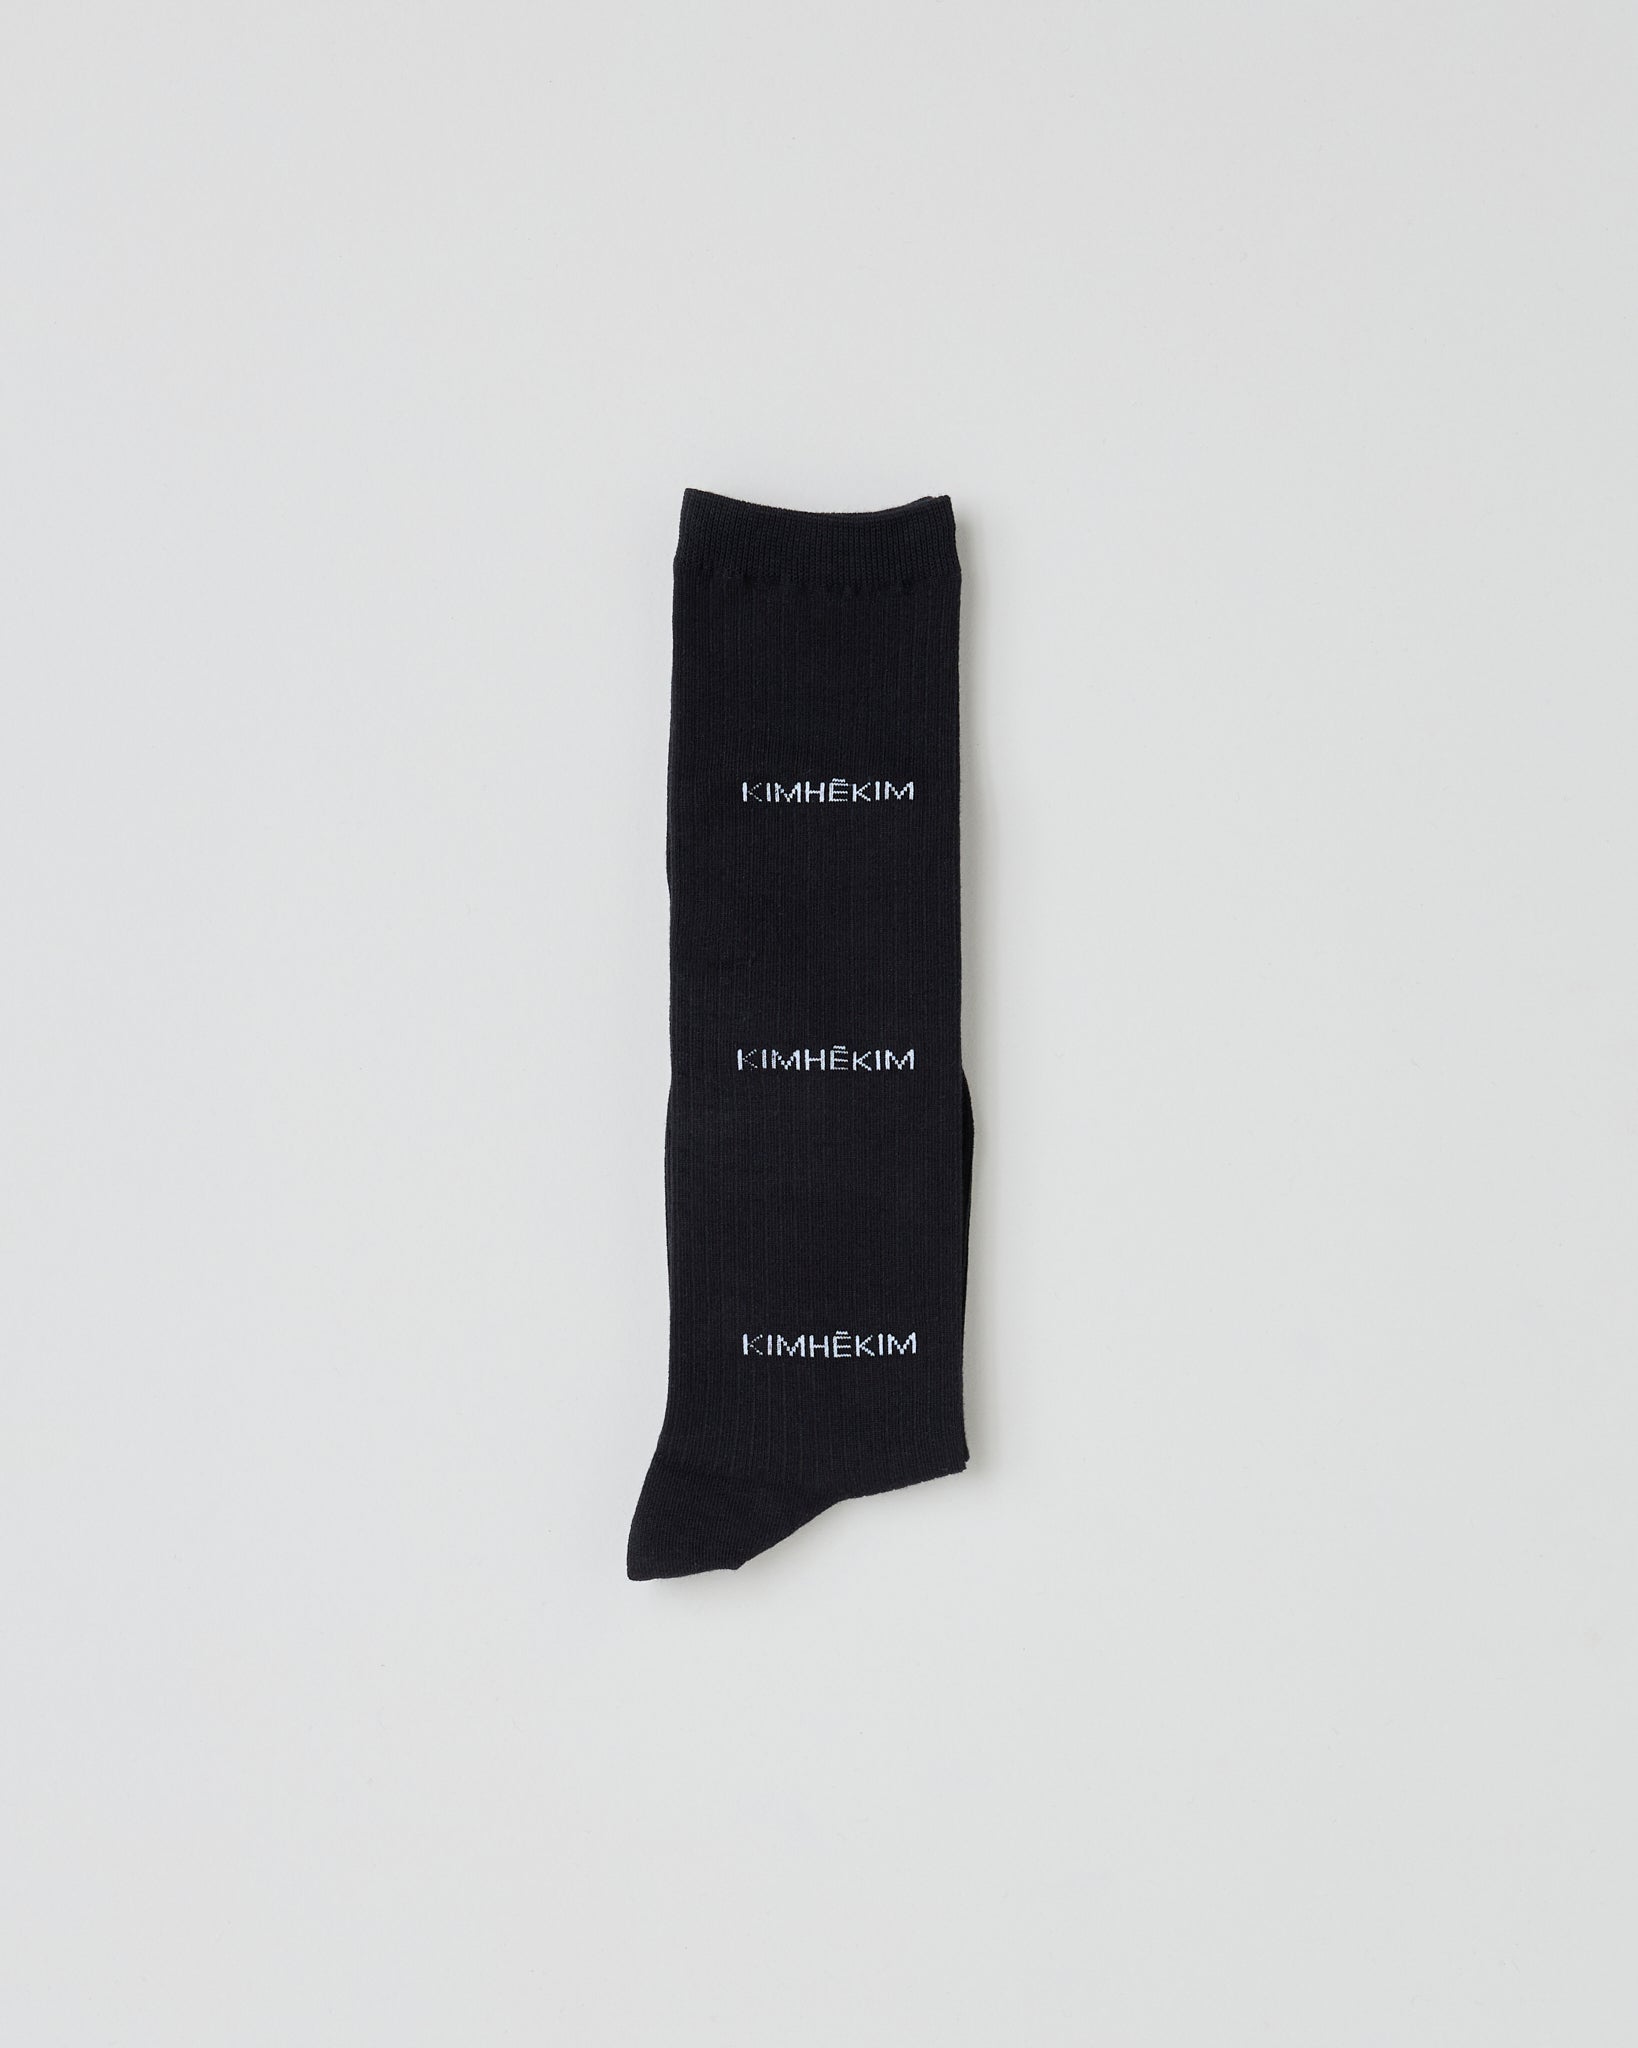 KIMHEKIM knee high socks(black)